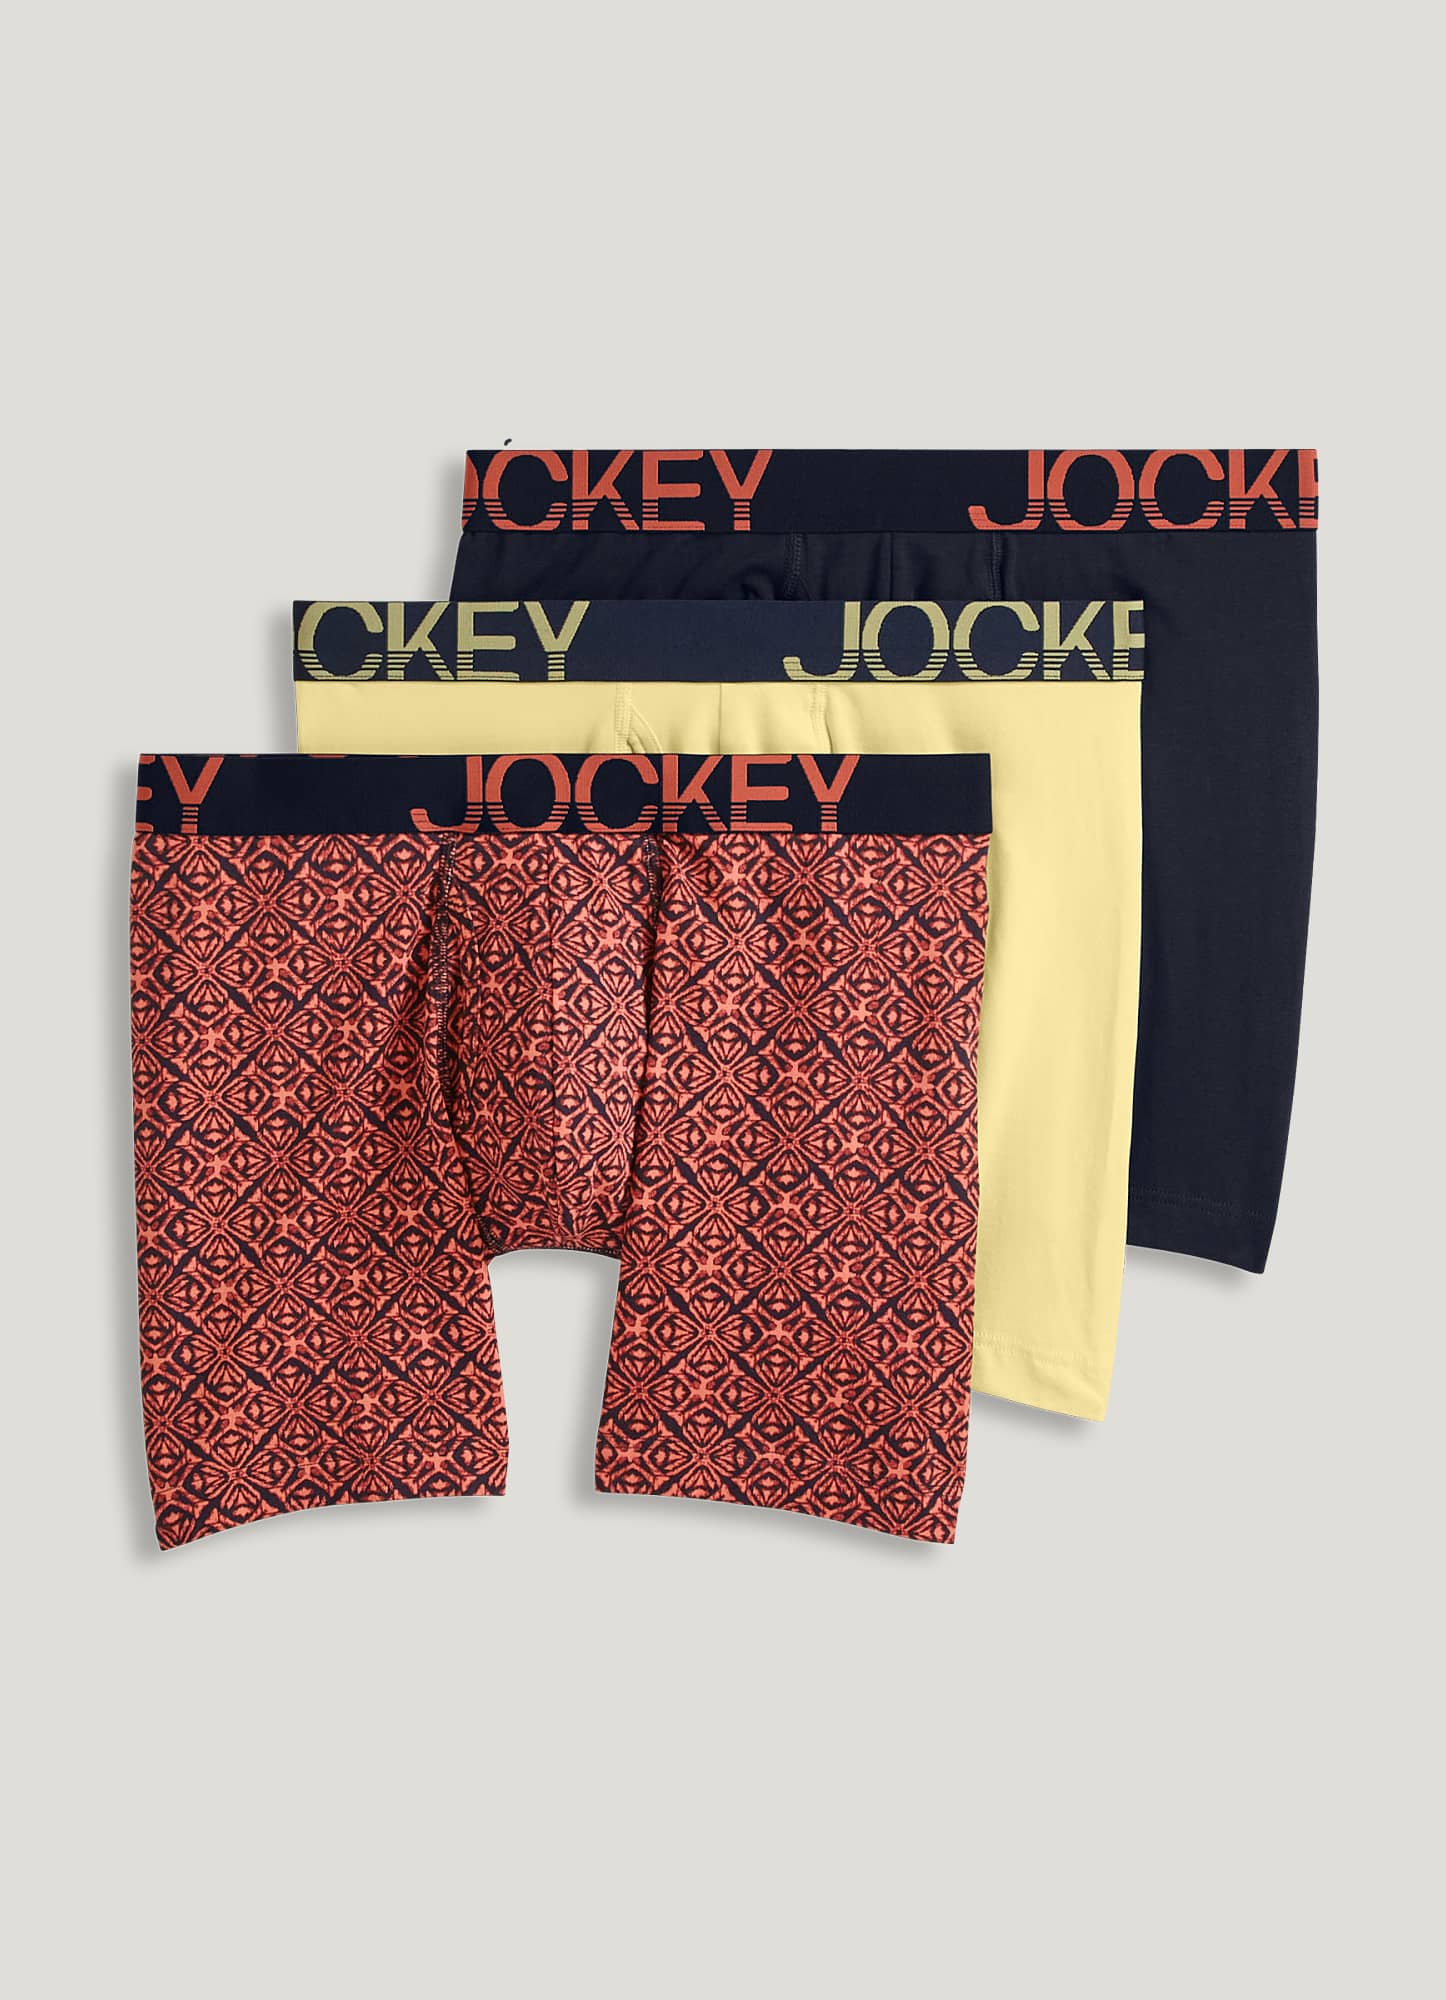 Underwear company Jockey international adding line of 'athleisure